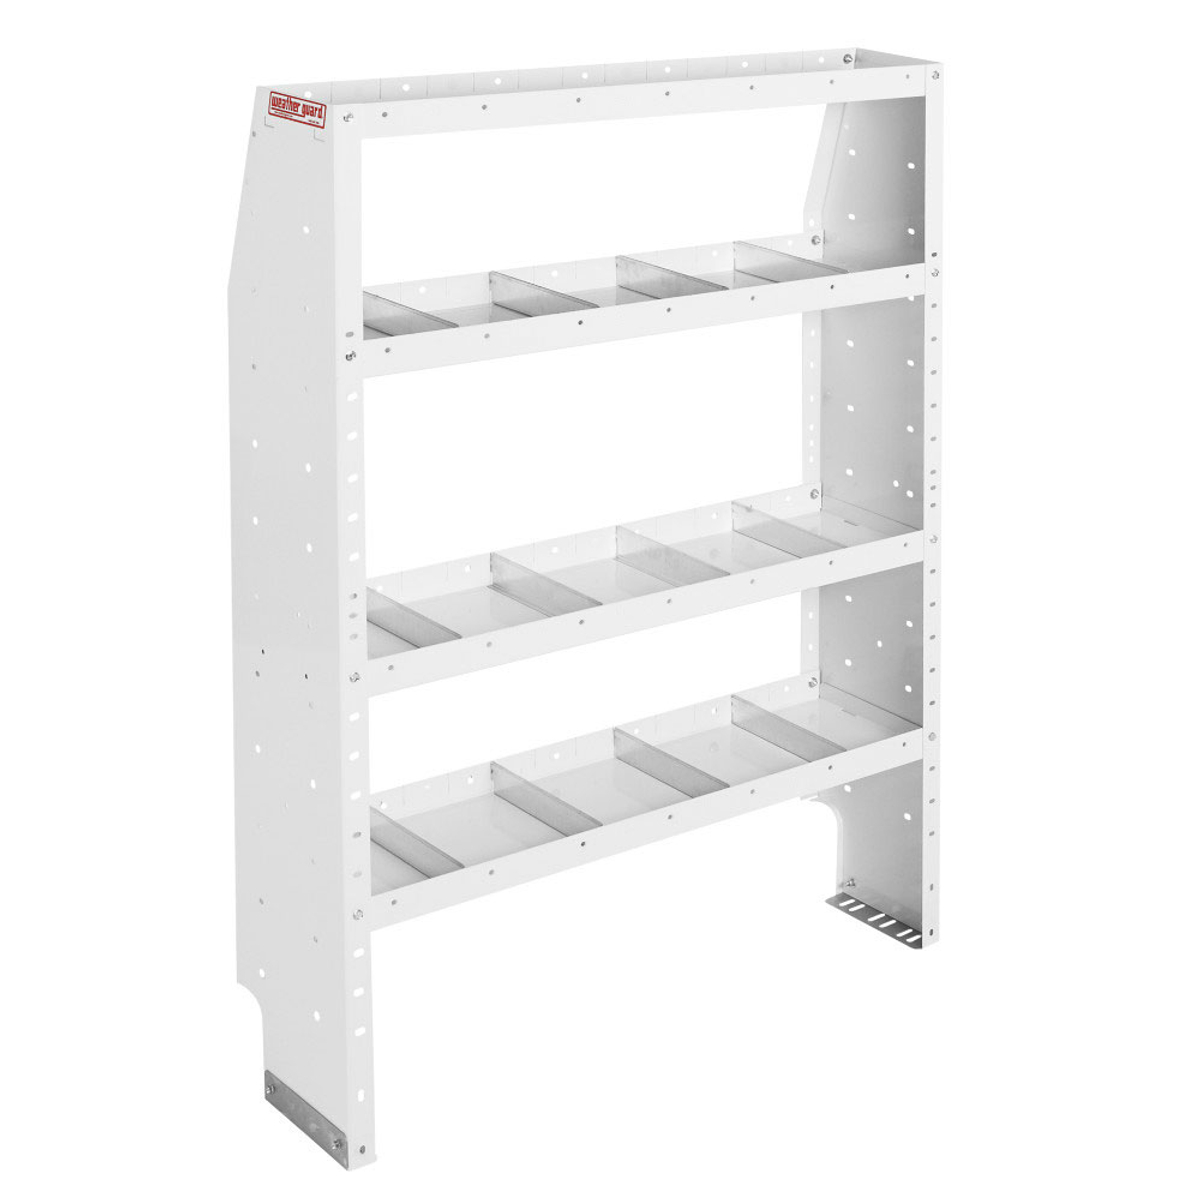 Adjustable 4 Shelf Unit - 60 in. x 42 in. x 13.5 in.